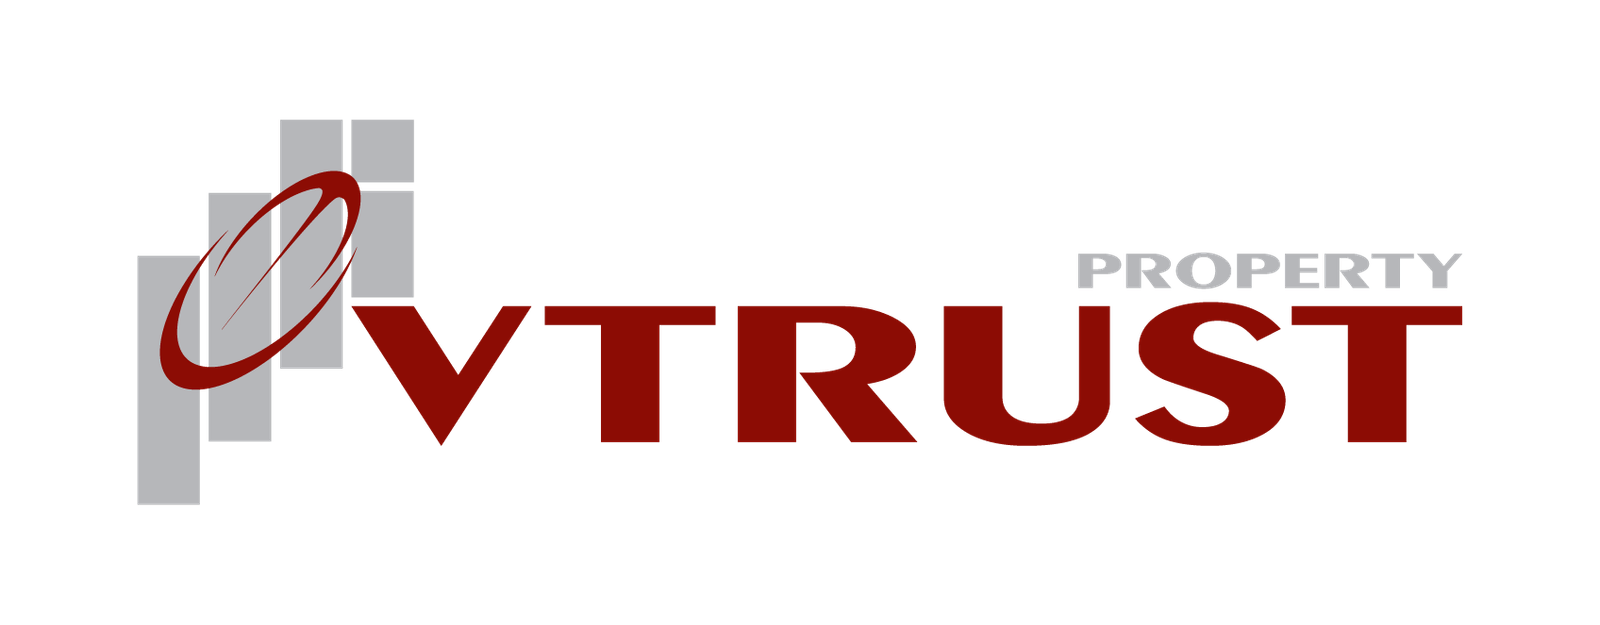 VTrust Property